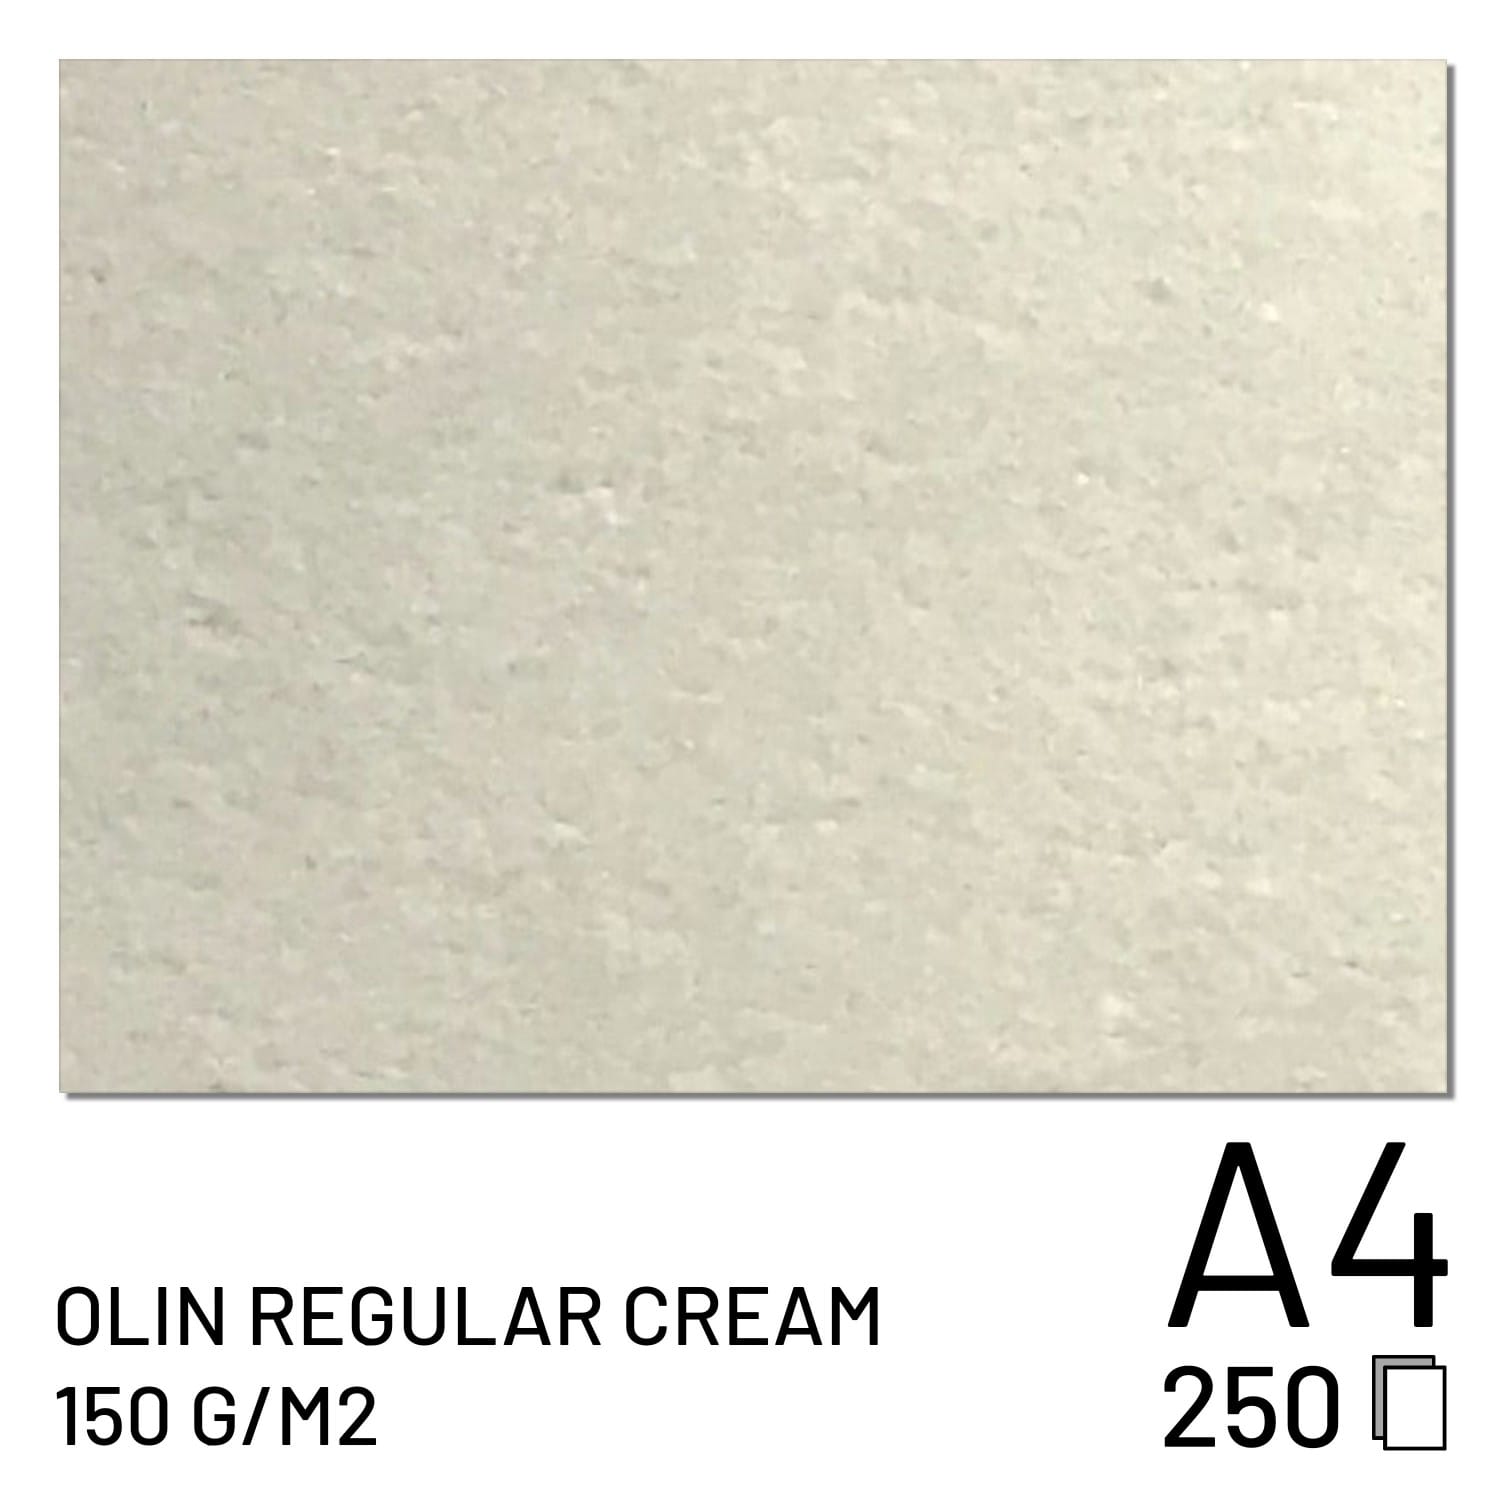 Papier FUJI Olin Regular Cream 150g A4 (250 feuilles) (70100148090)